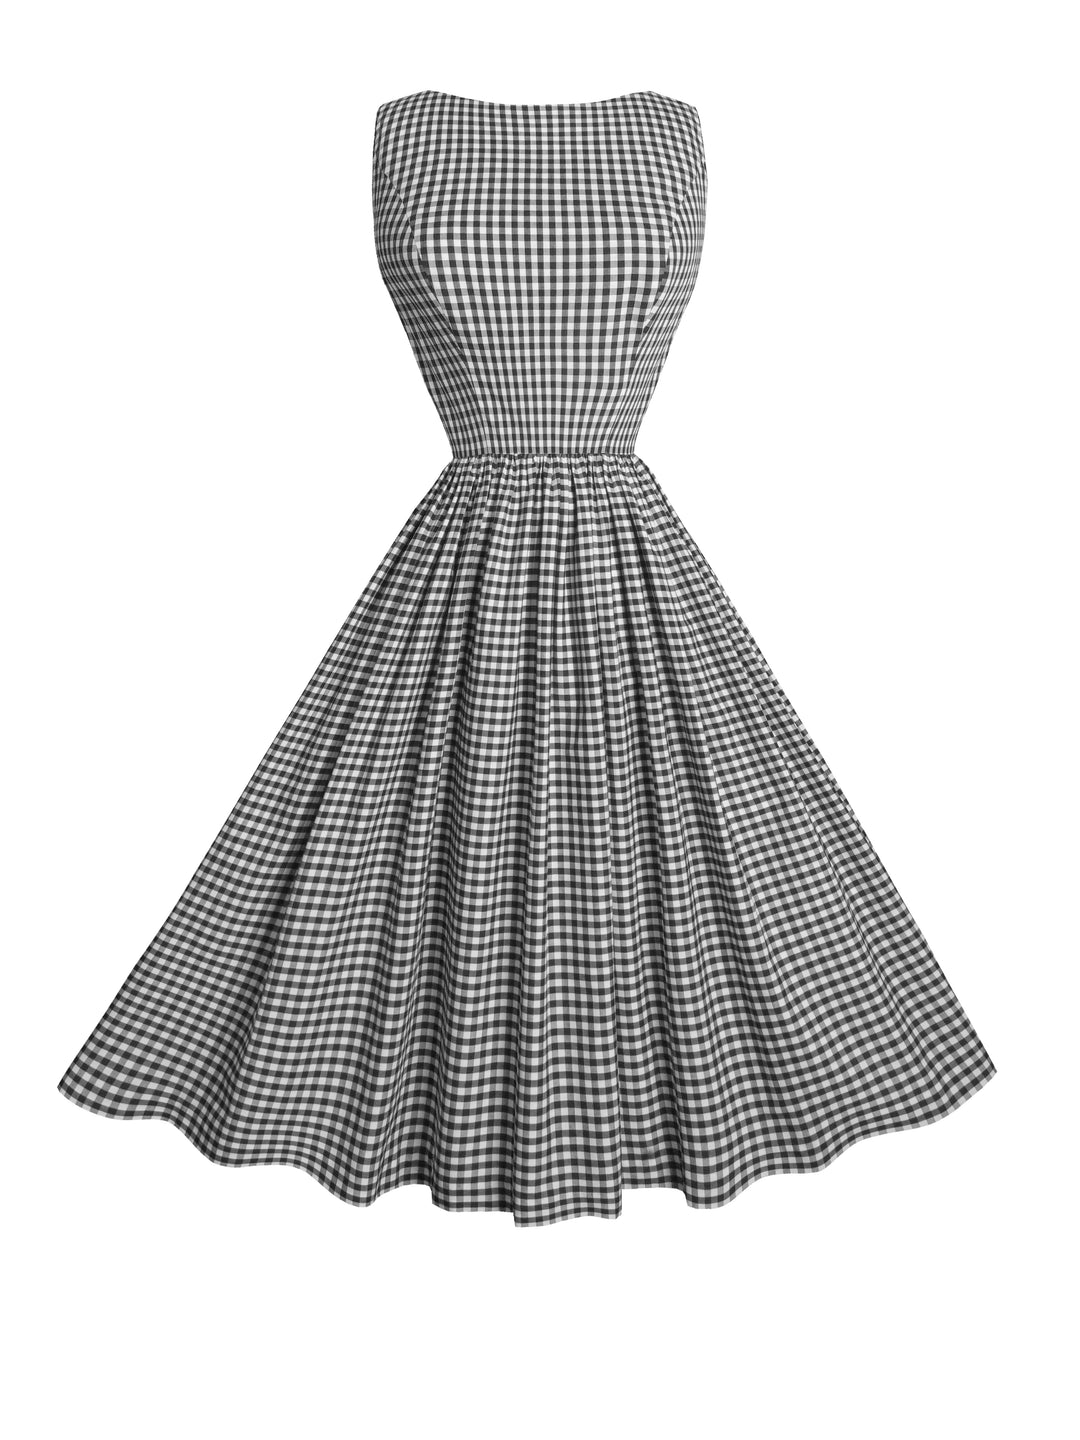 Choose a fabric: Audrey Dress